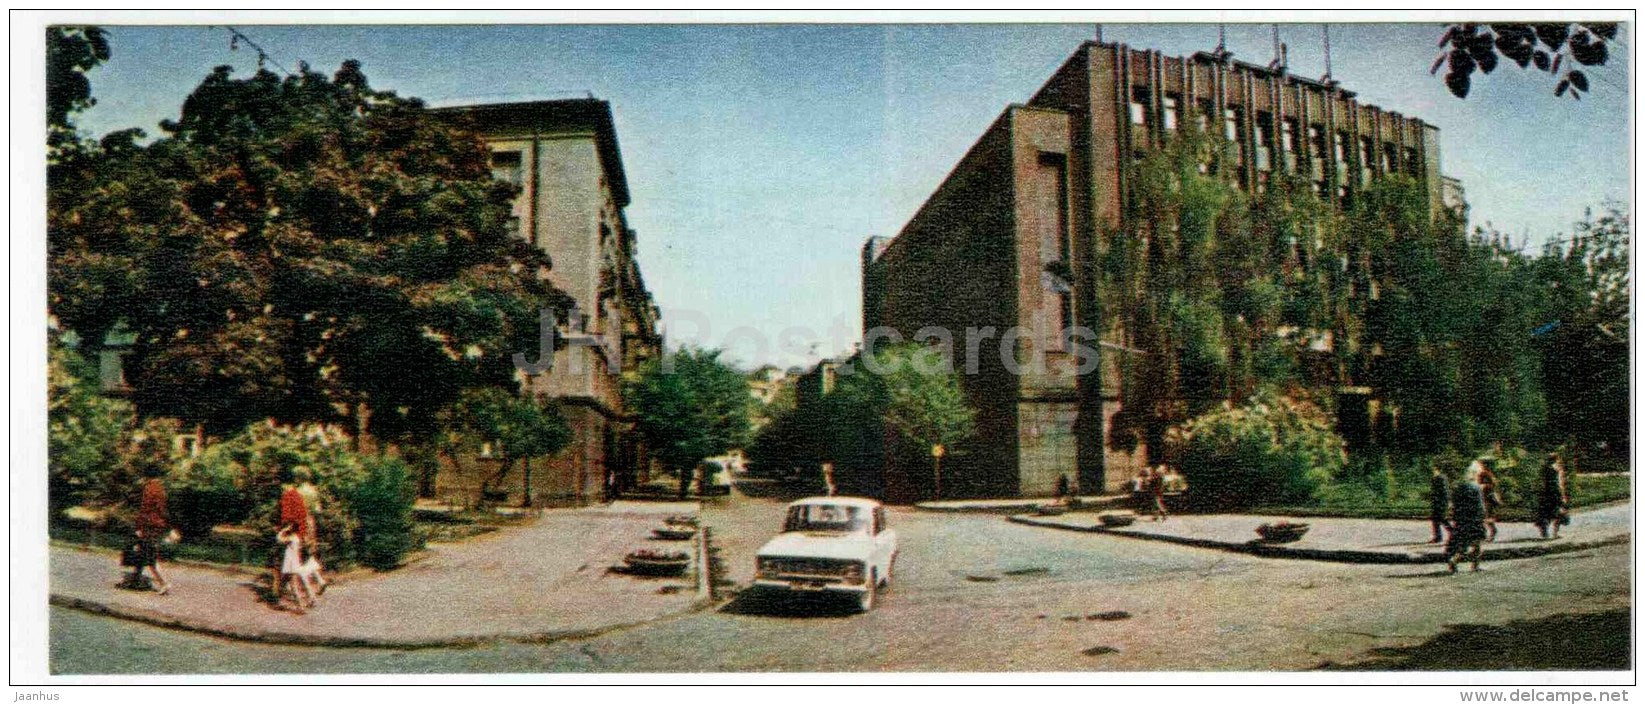 City Executive Committee - car Moskvitch - Kaunas - mini postcard - 1971 - Lithuania USSR - unused - JH Postcards